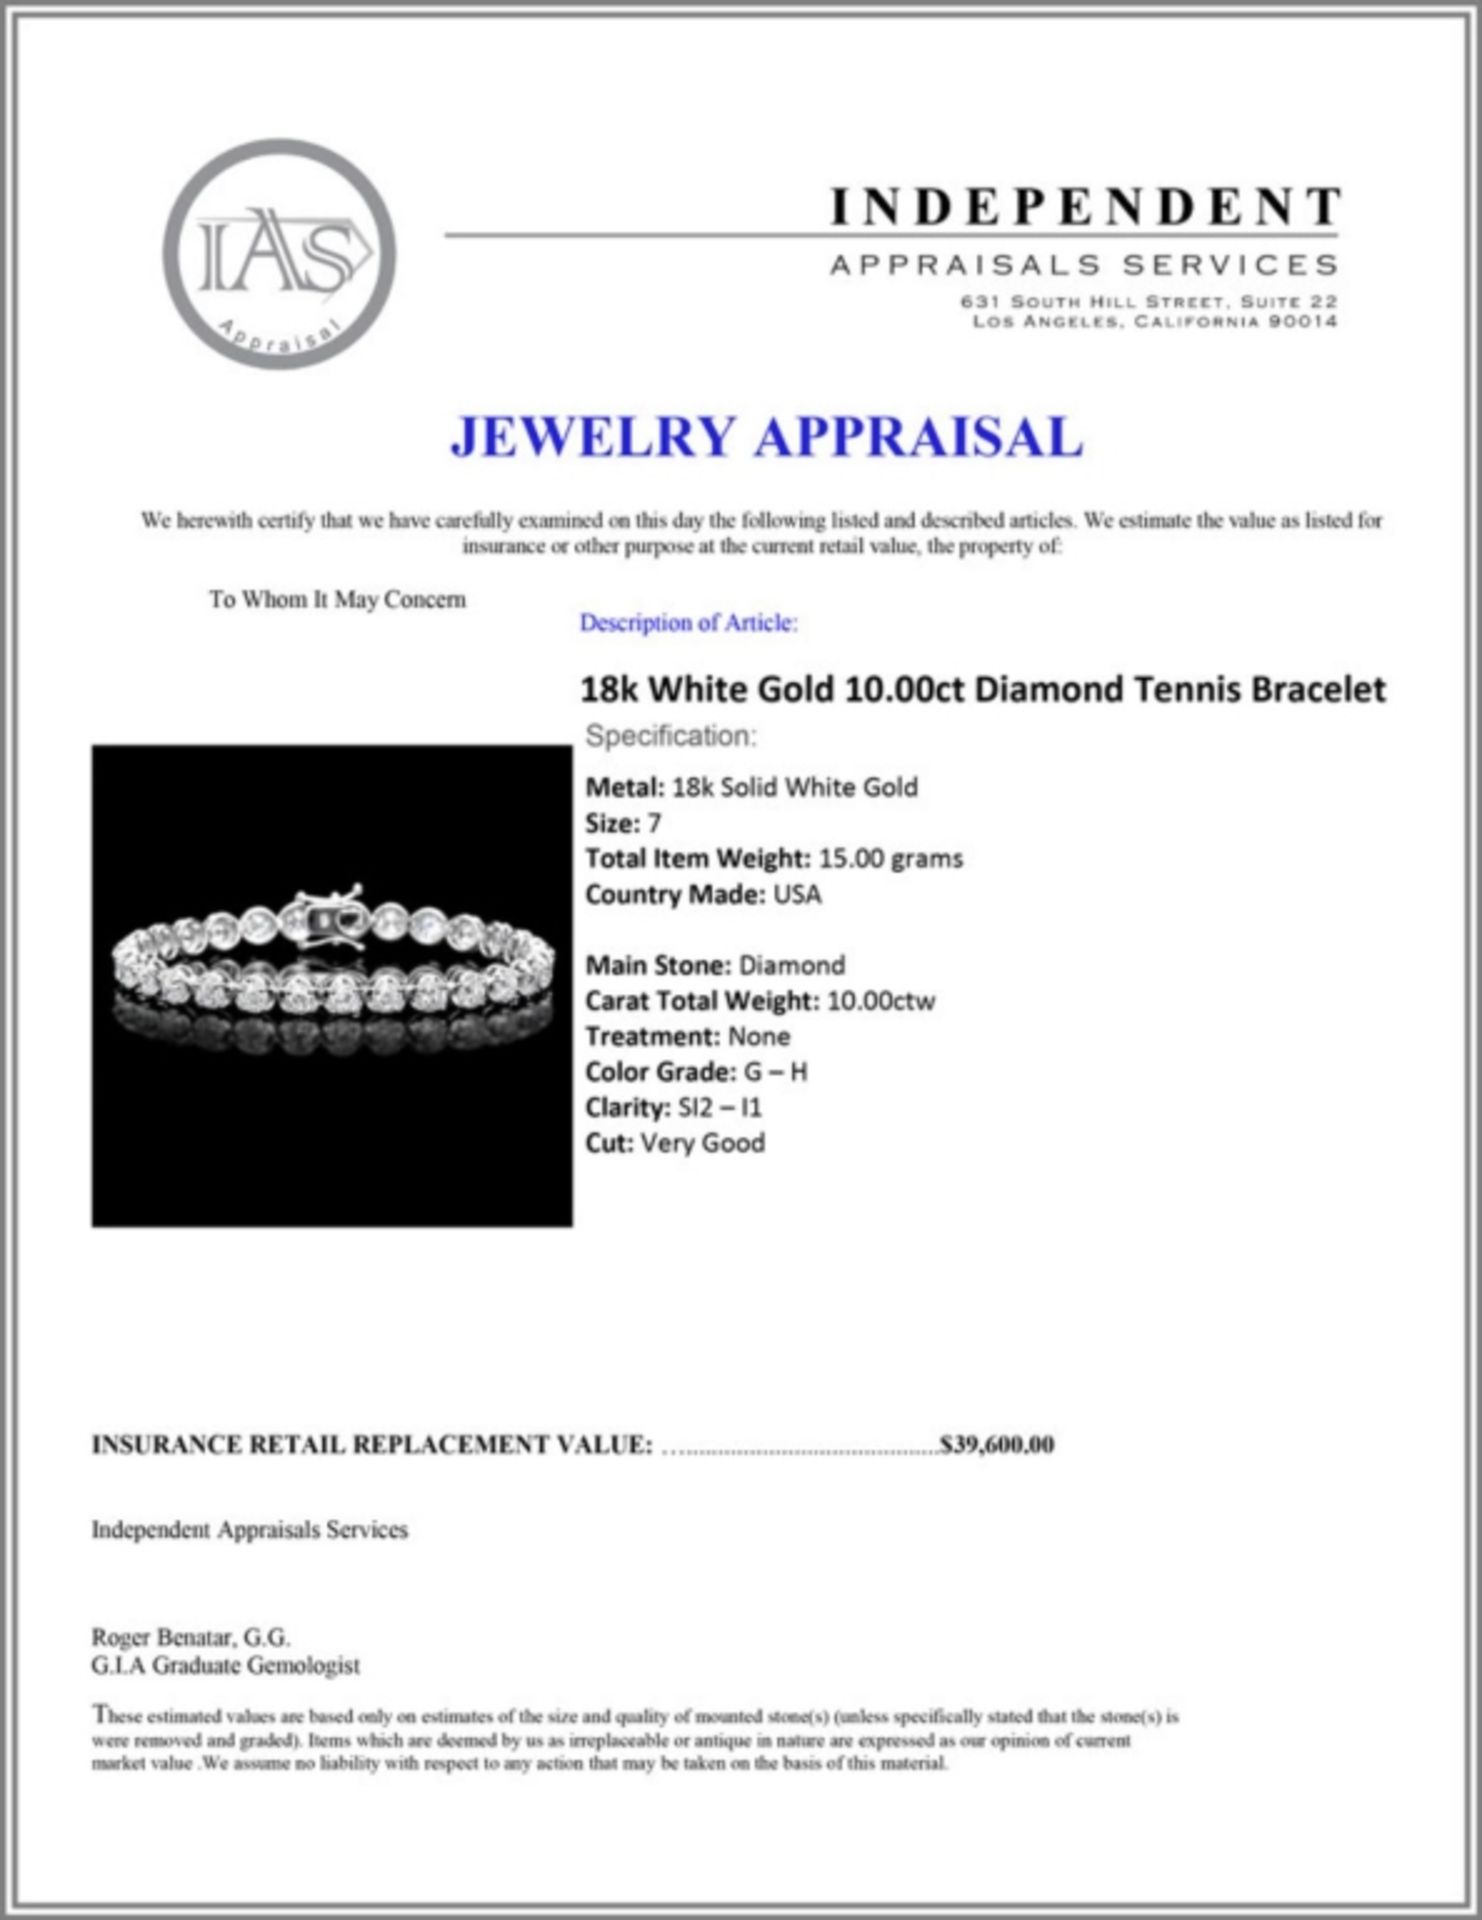 ^18k White Gold 10.00ct Diamond Tennis Bracelet - Image 3 of 3